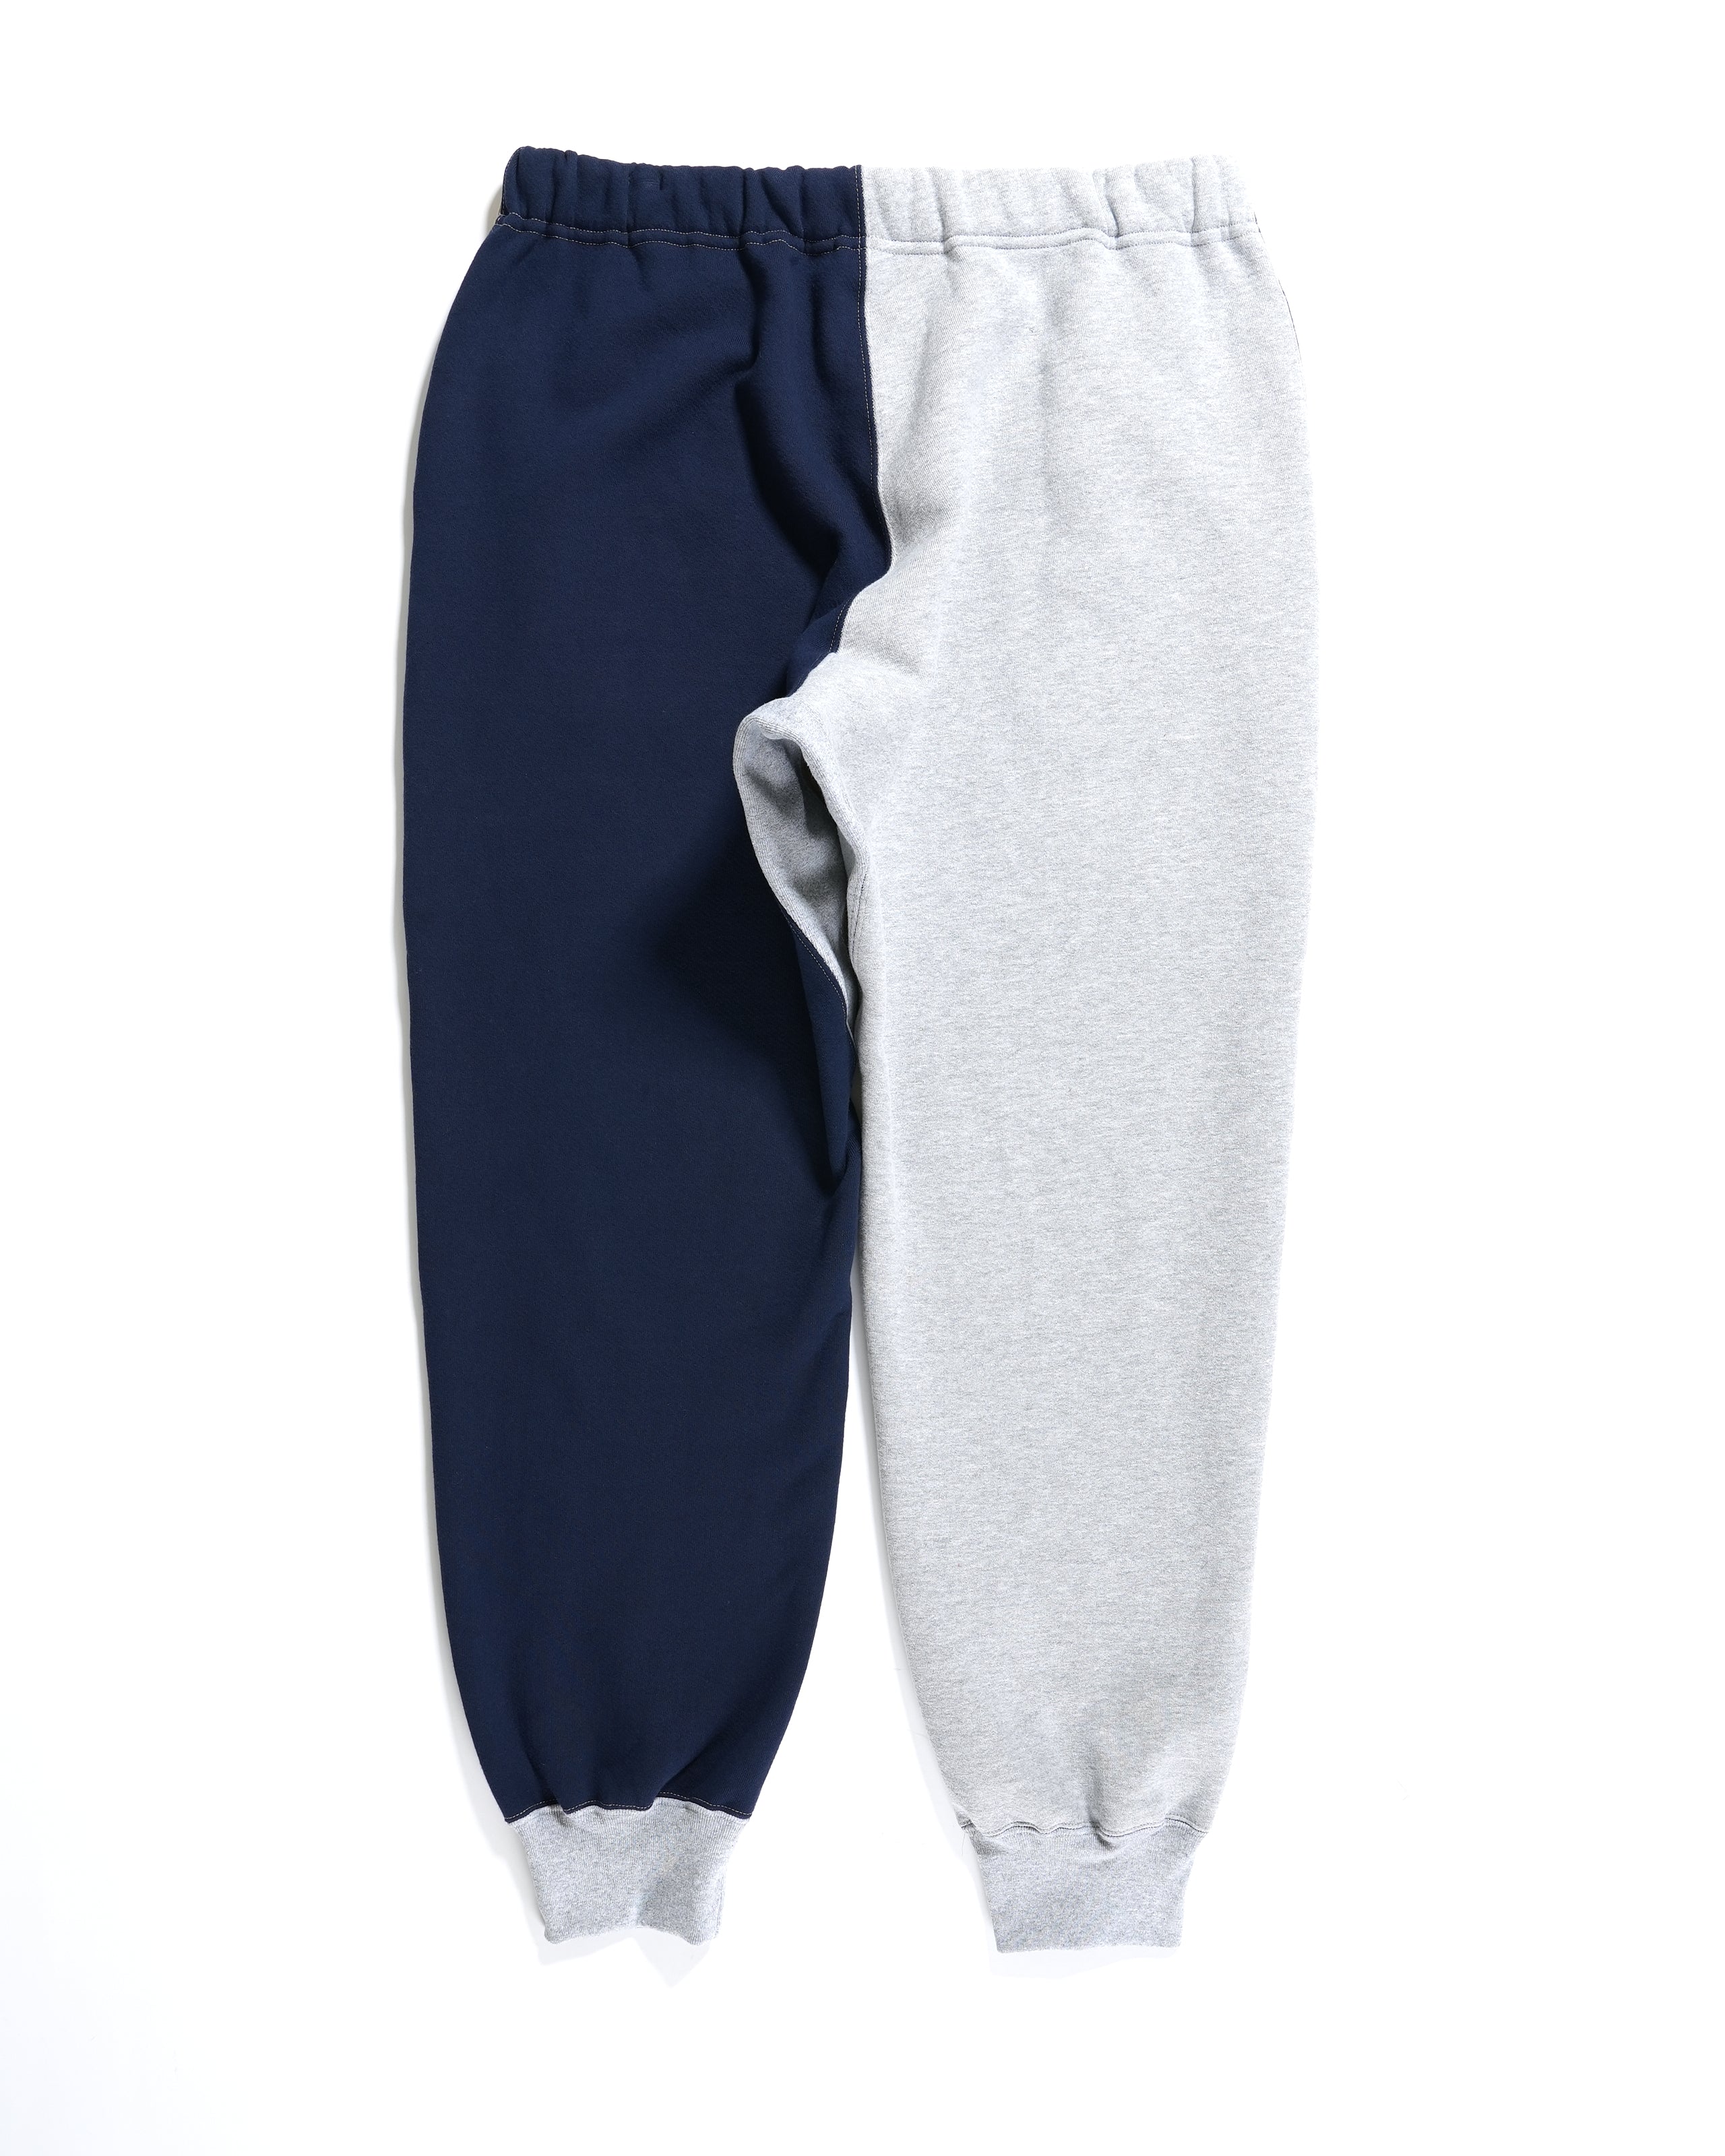 Combo Sweat Pants - Khaki 12oz Cotton Fleece